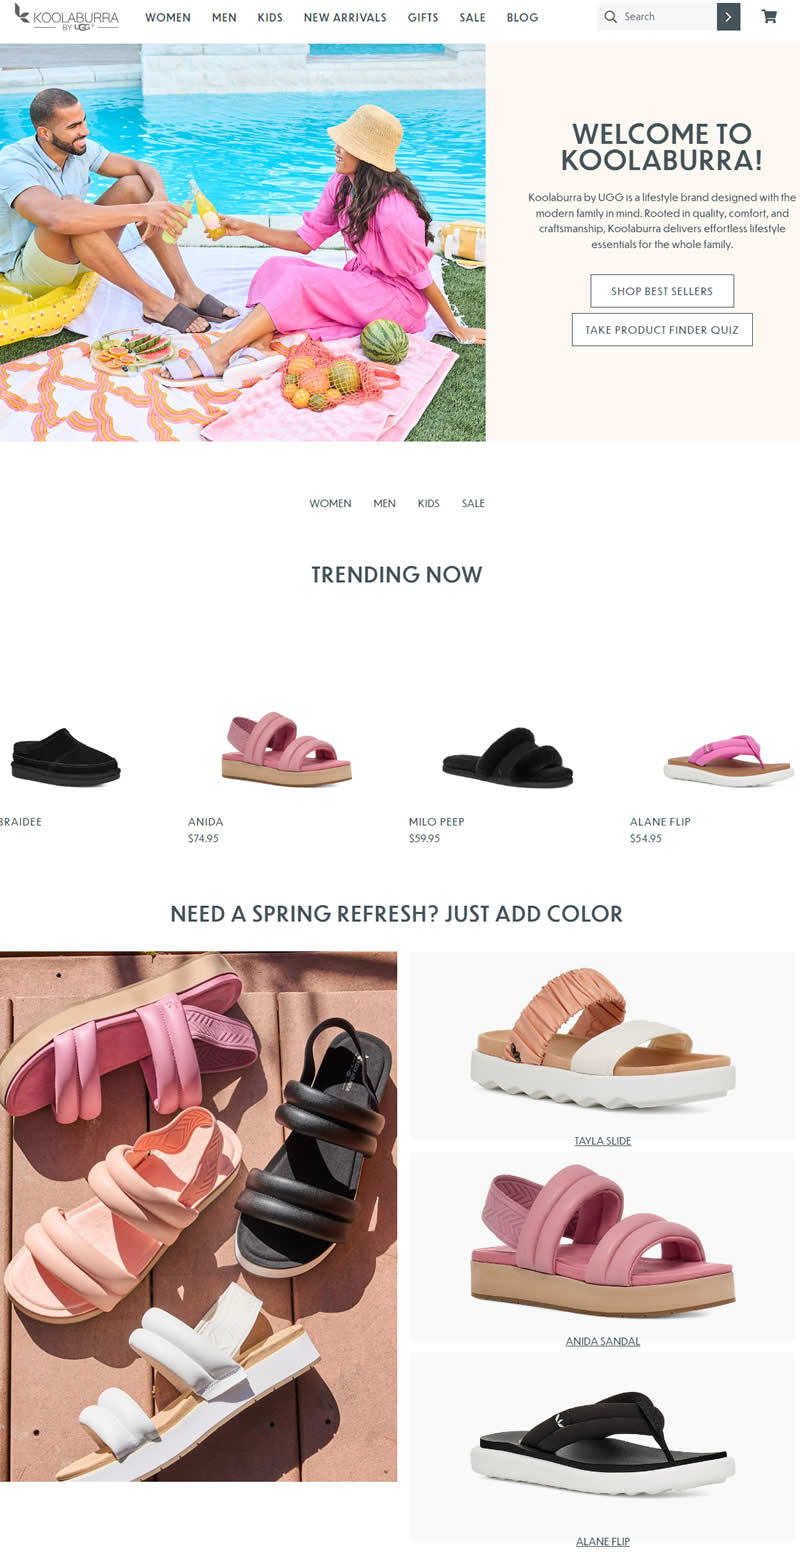 Koolaburra鞋履品牌澳洲官网首页